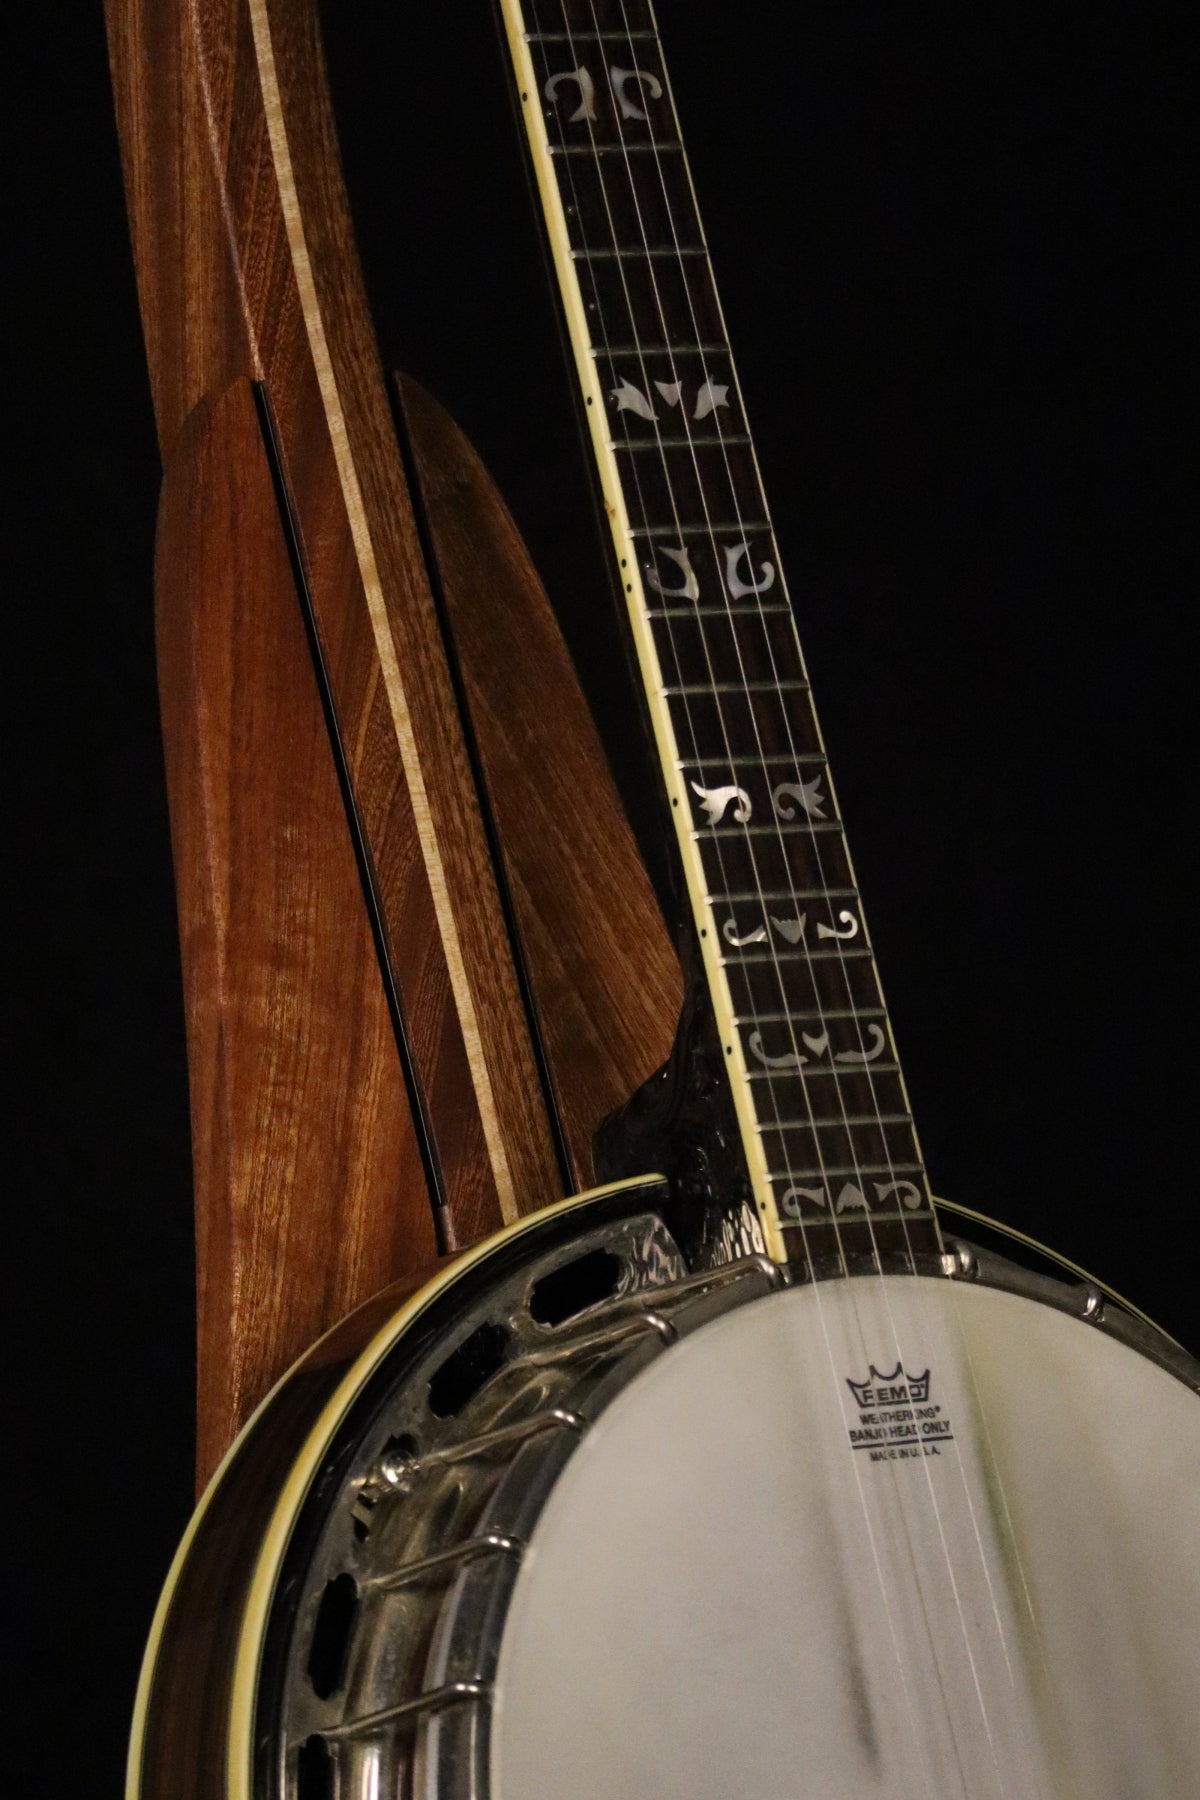 Folding sapele mahogany and curly maple wood banjo floor stand closeup front image with Alvarez banjo